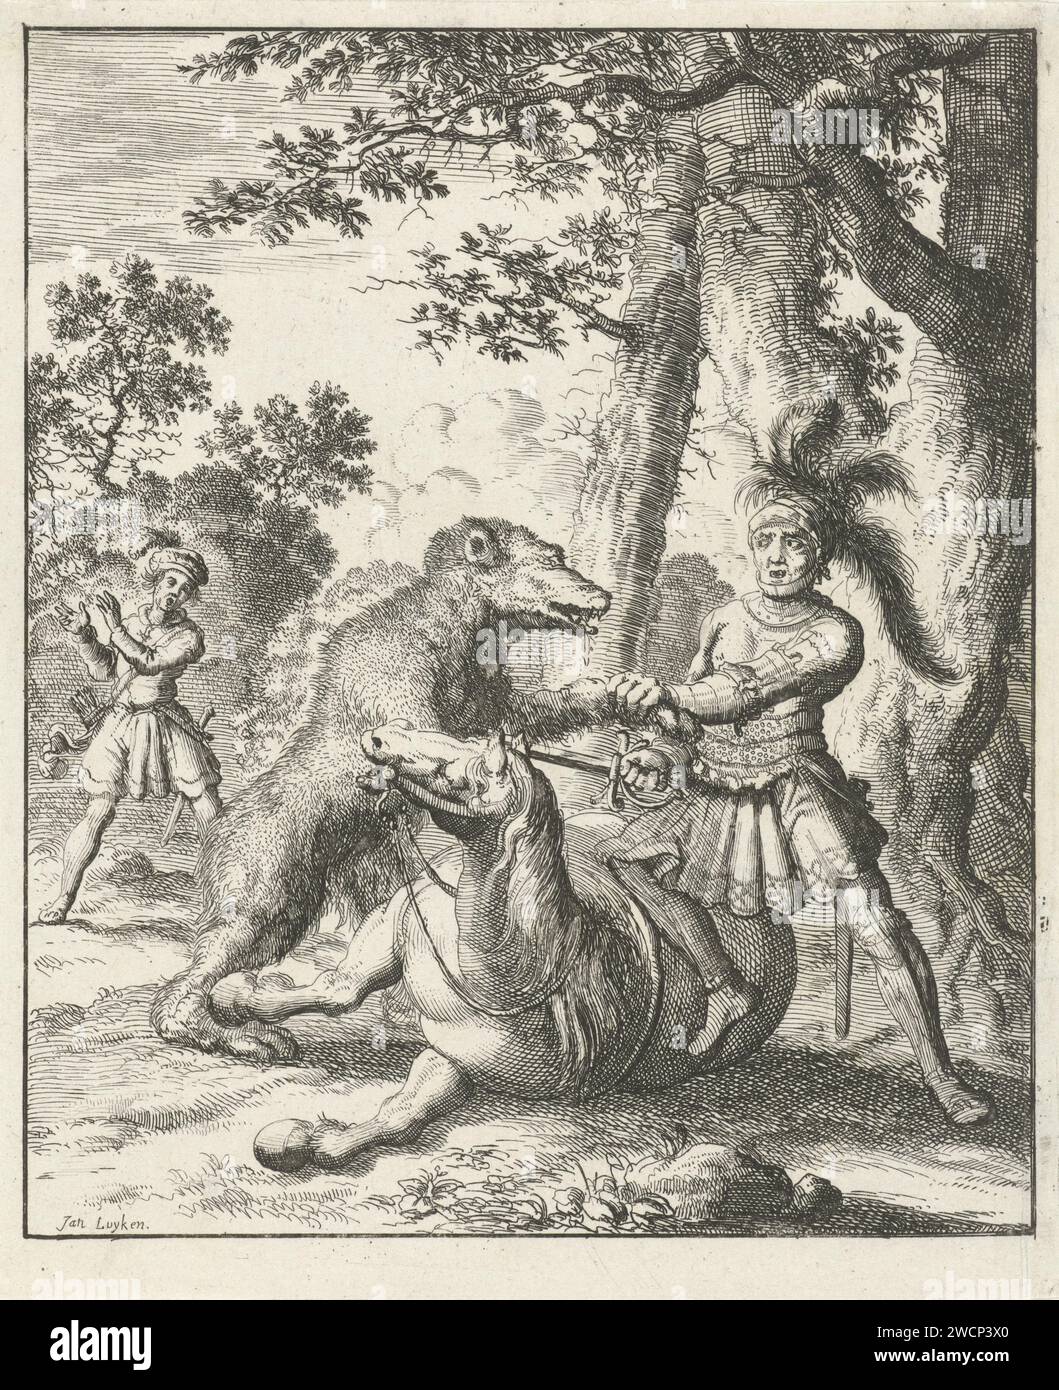 Godfried van Bouillon beats a bear, Jan Luyken, 1683 print  Amsterdam paper etching militant proselytizing: religious war, crusade, etc.. man killing animal Stock Photo